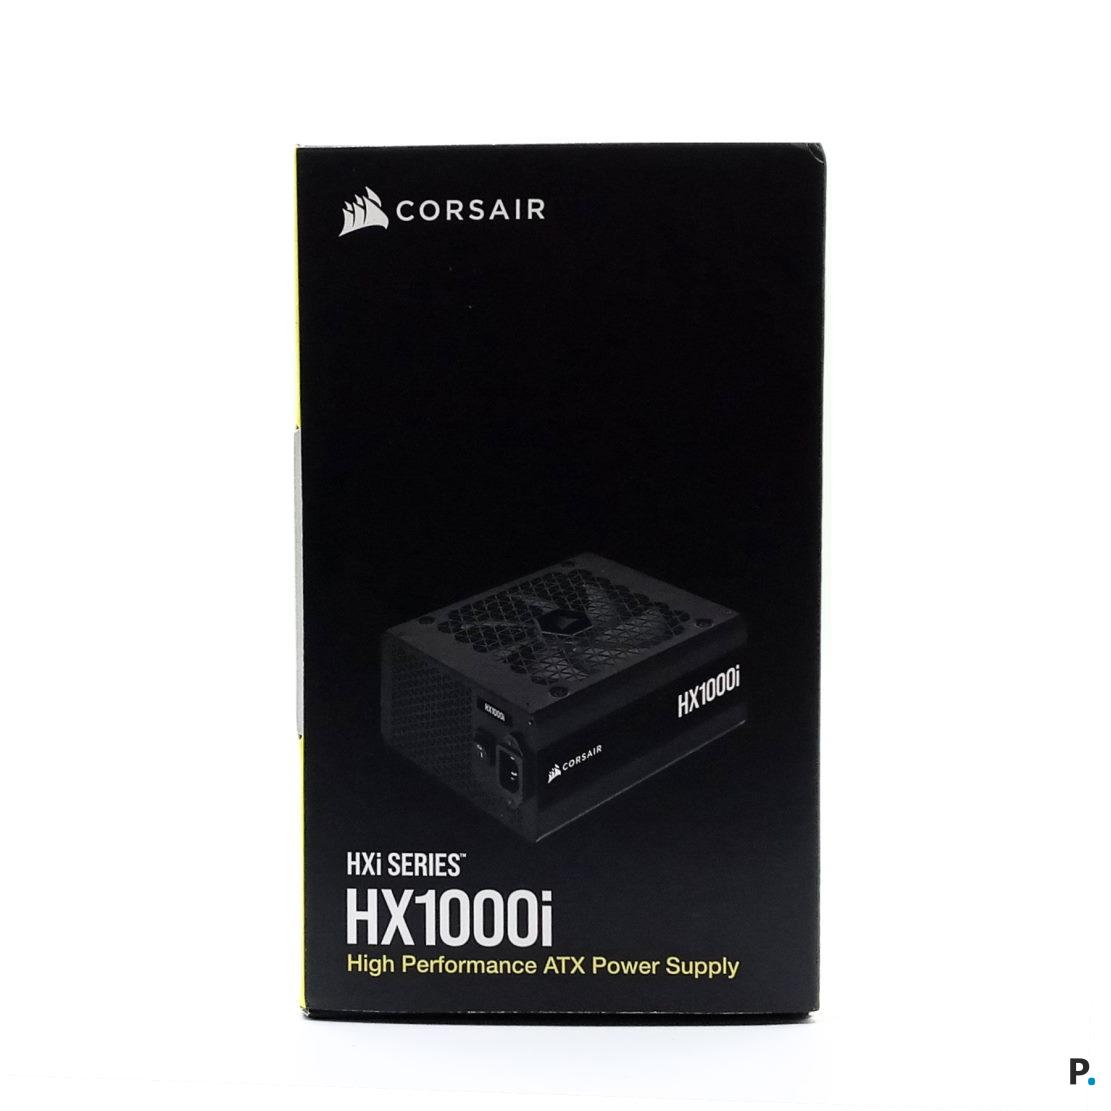 2 Corsair HX1000i Review